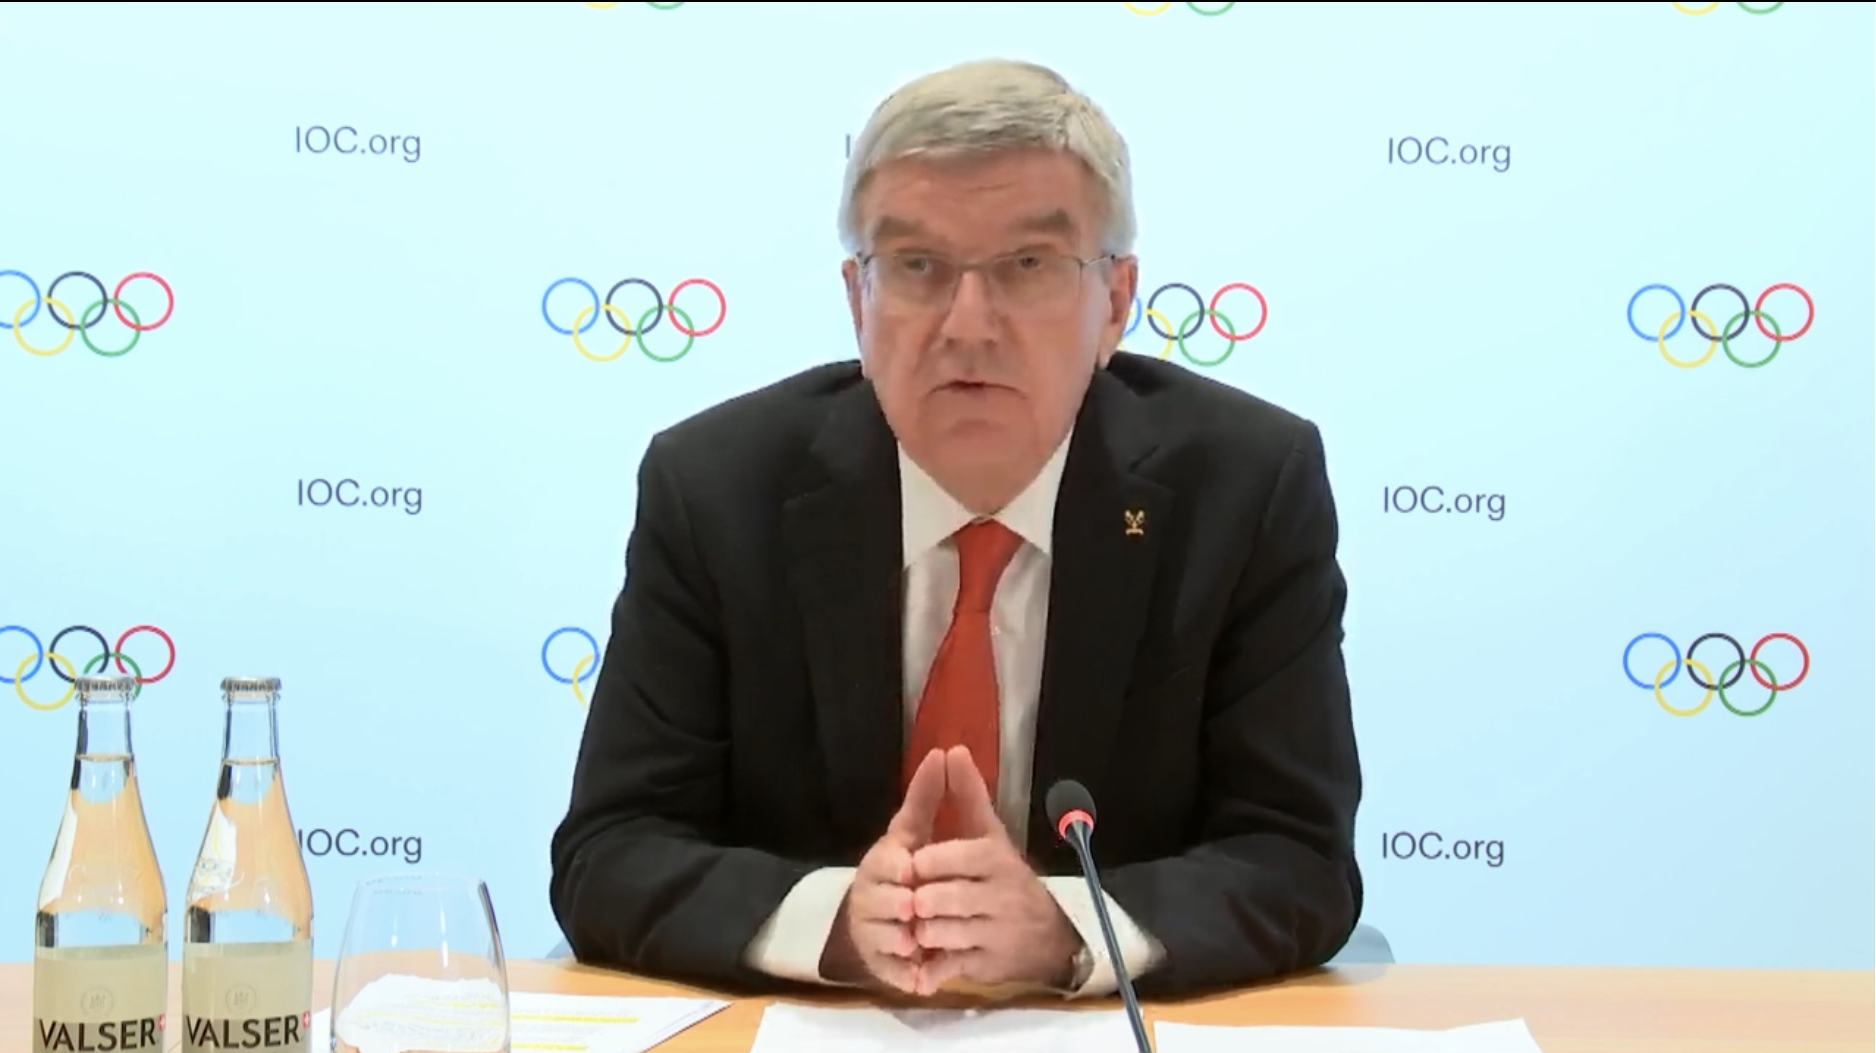 IOC President Thomas Bach insisted 